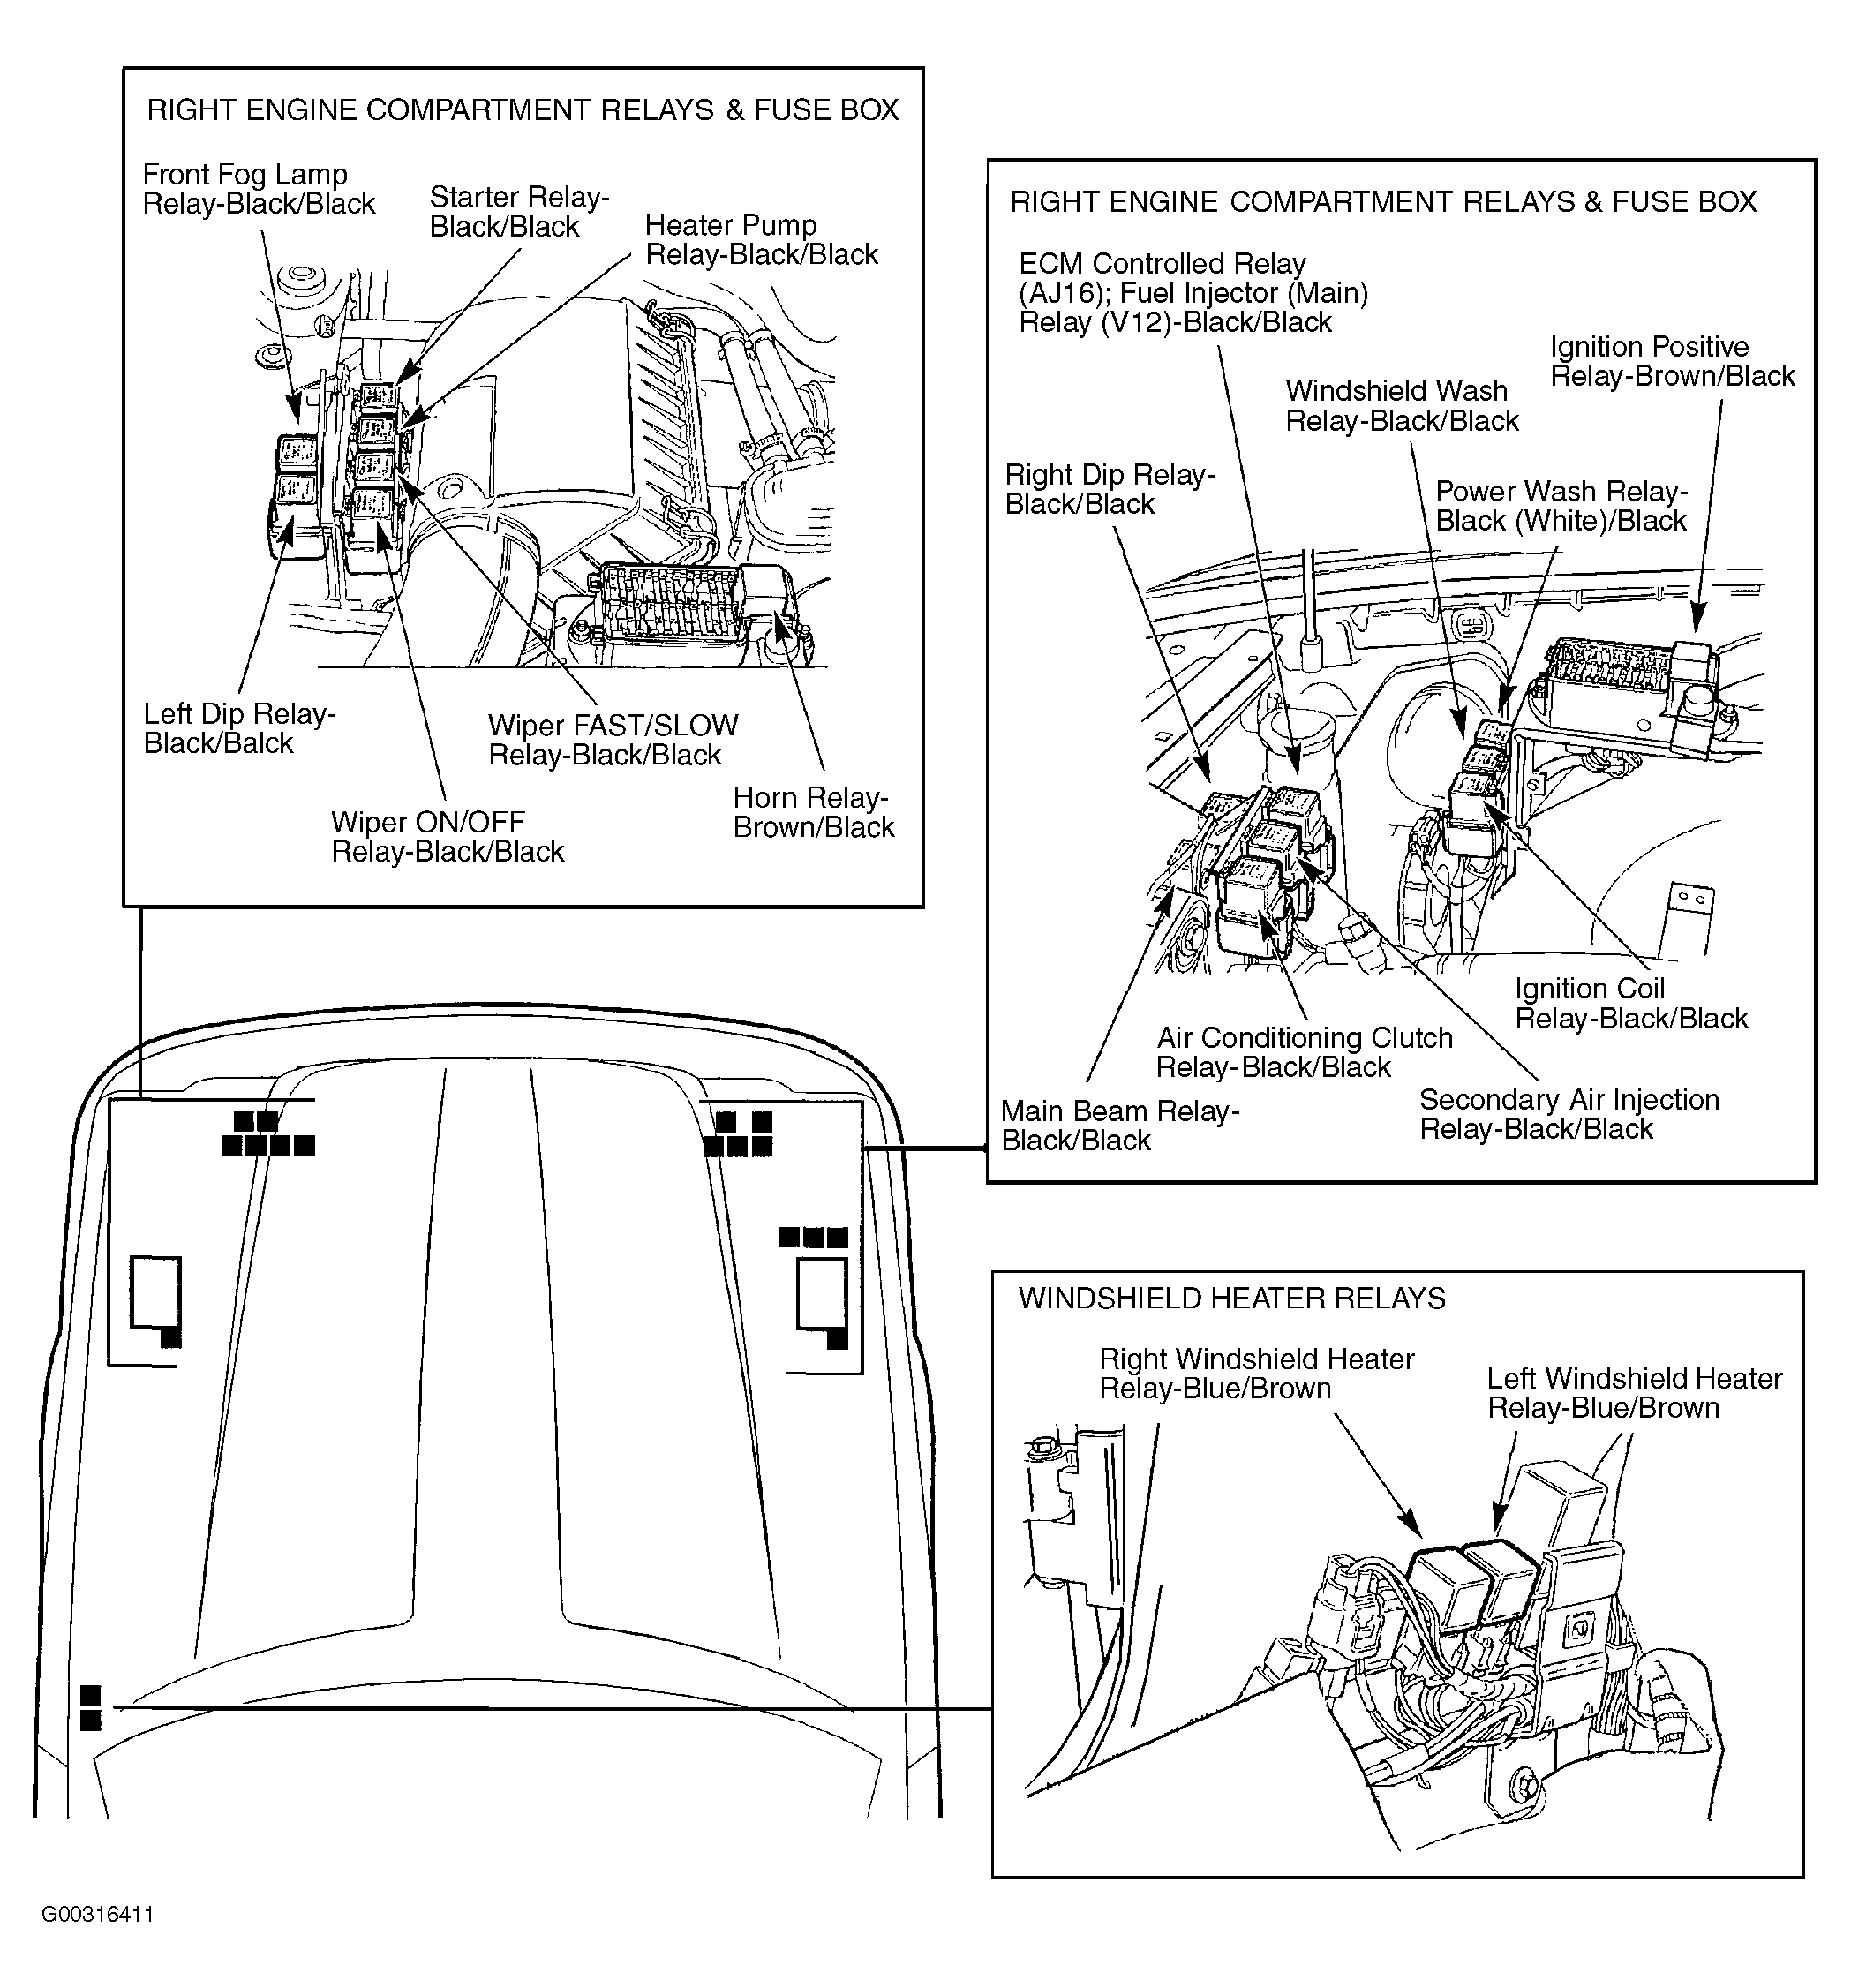 Jaguar XJ6 Vanden Plas 1997 - Component Locations -  Identifying Engine Compartment Fuse/Relay Locations